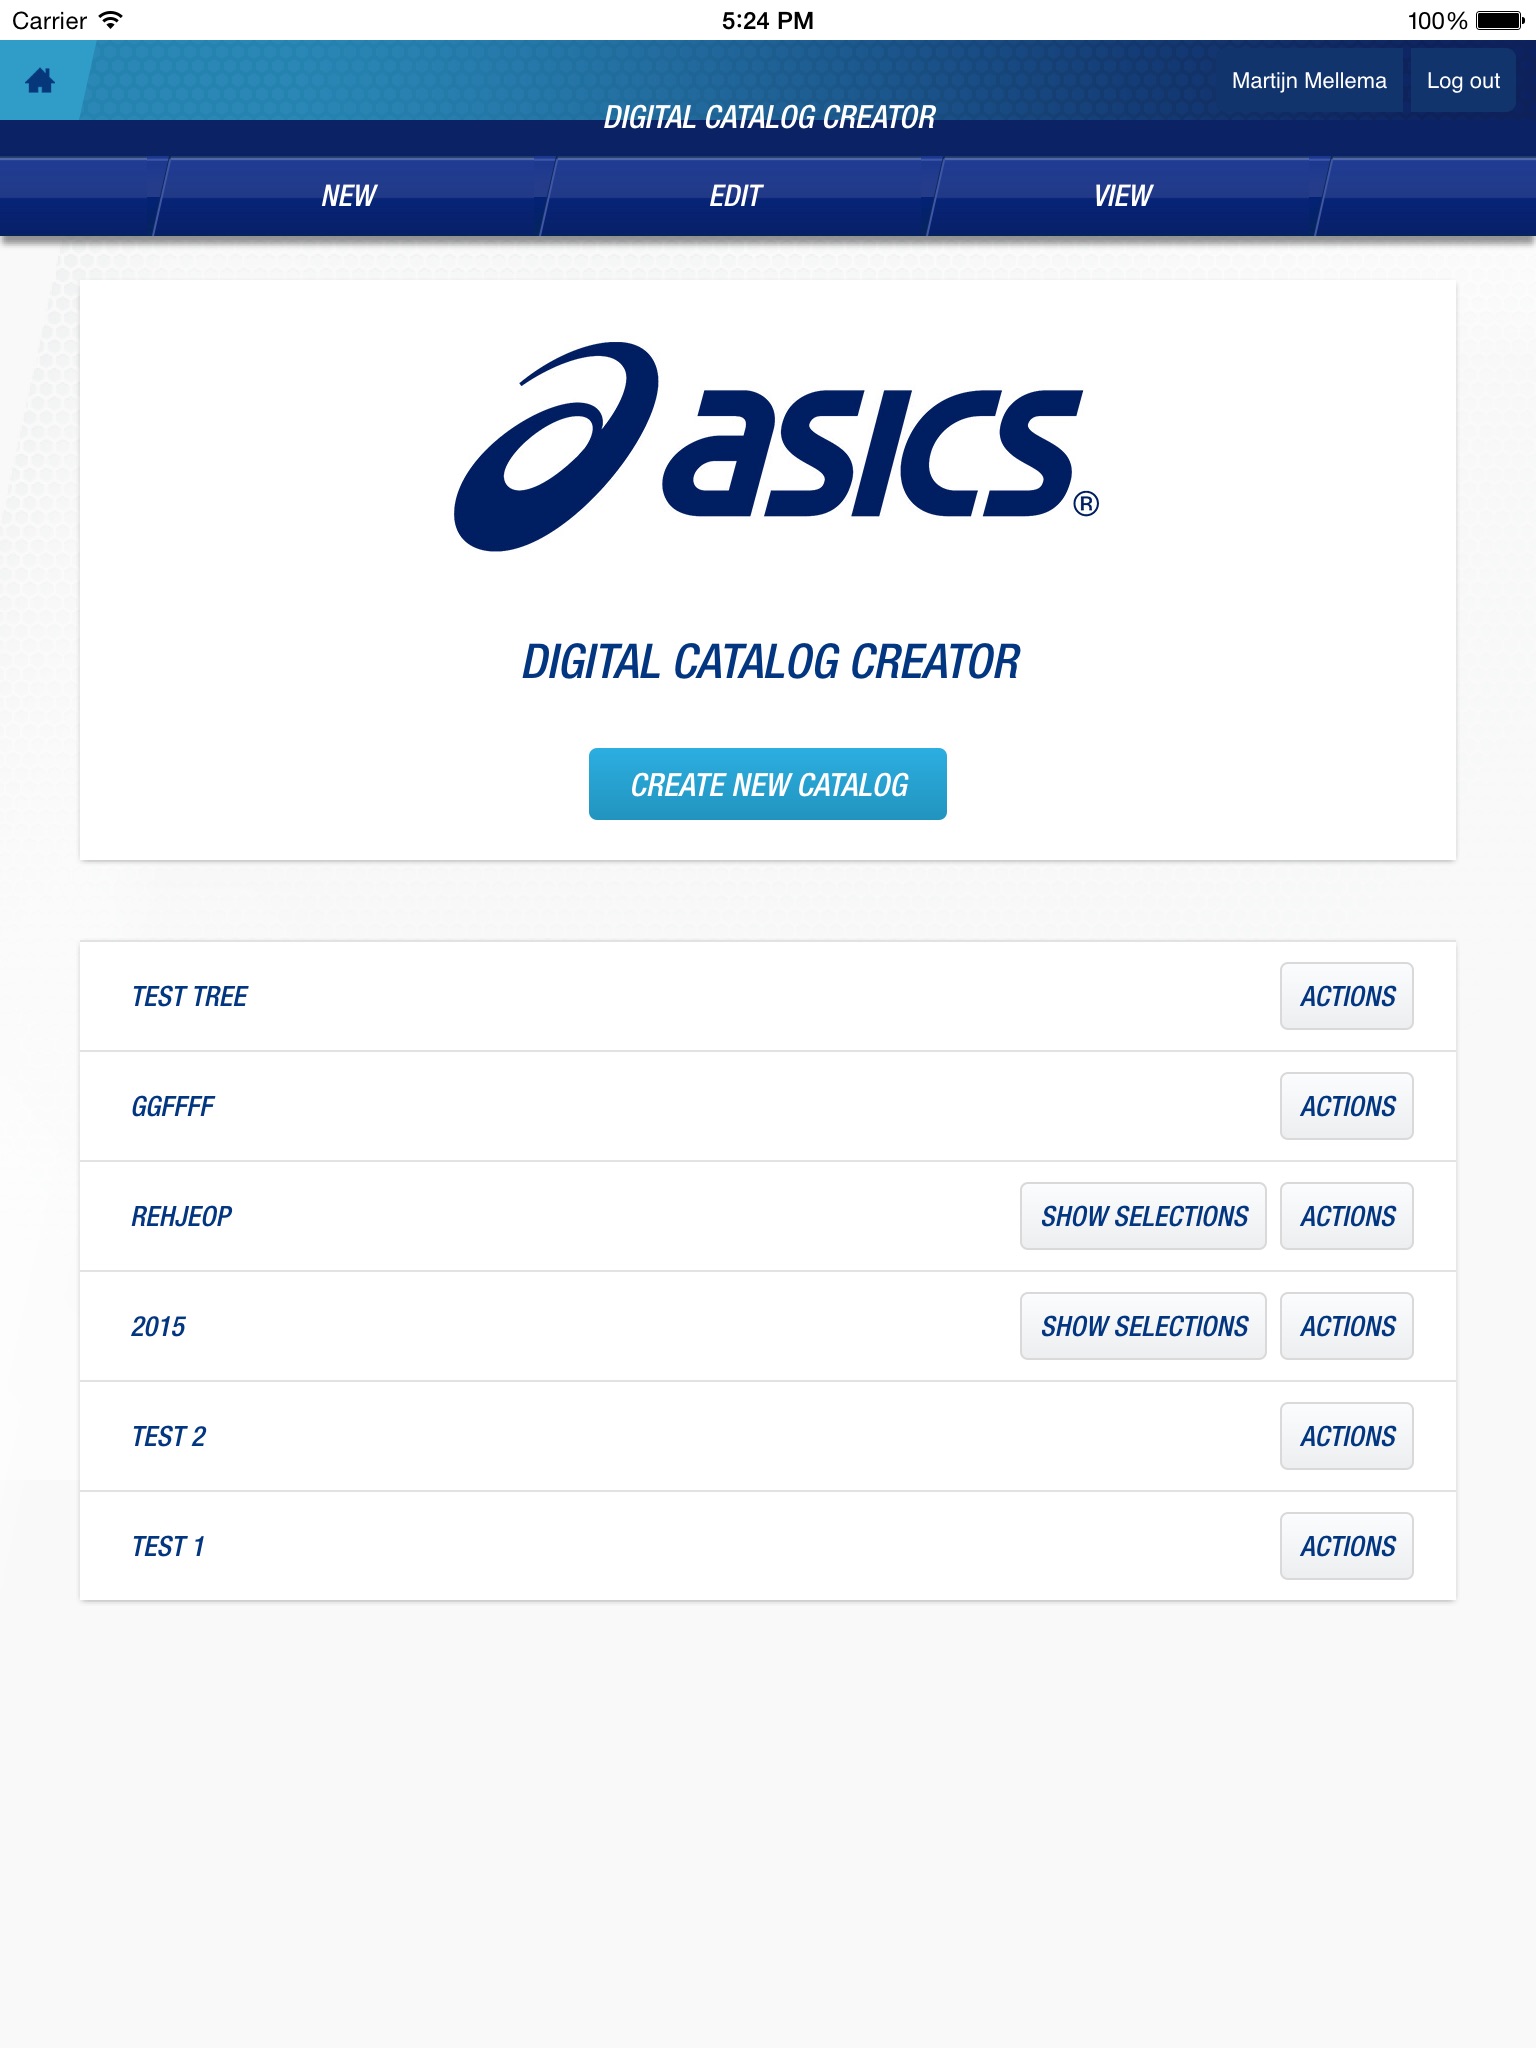 ASICS DCC screenshot 3